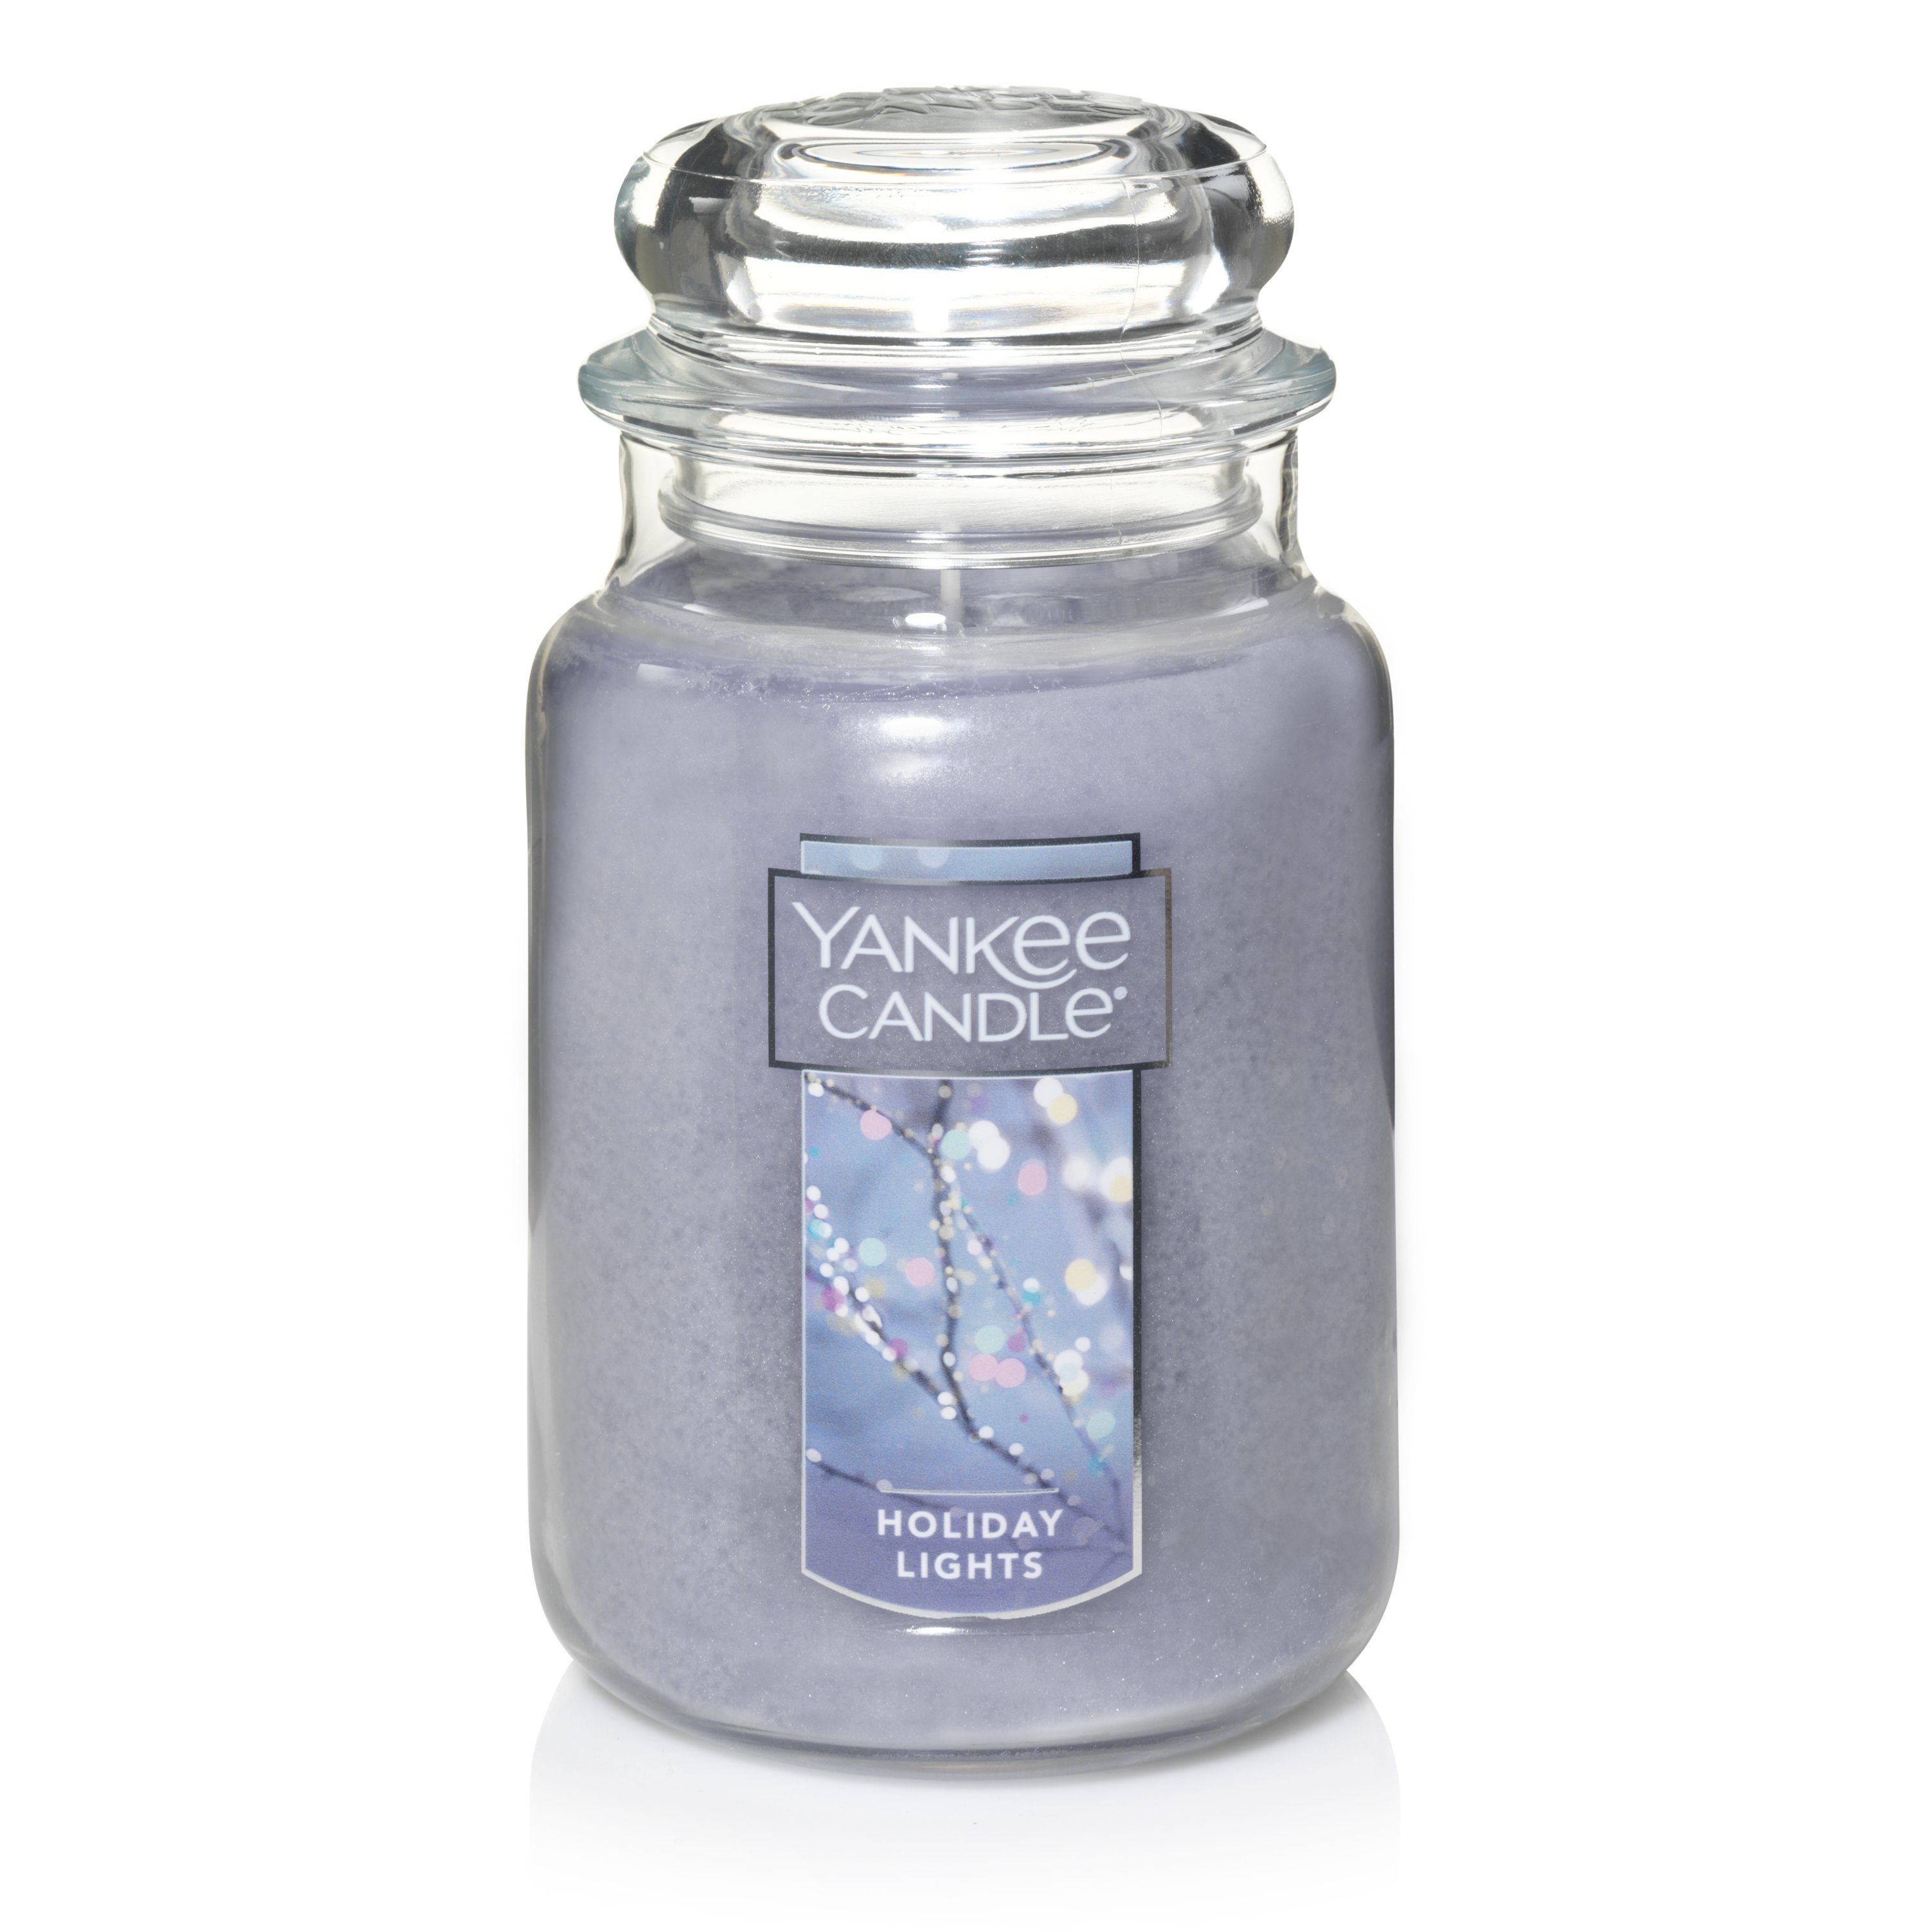 Yankee Candle Winter Night Stars Jar Candle - Bougie parfumée en